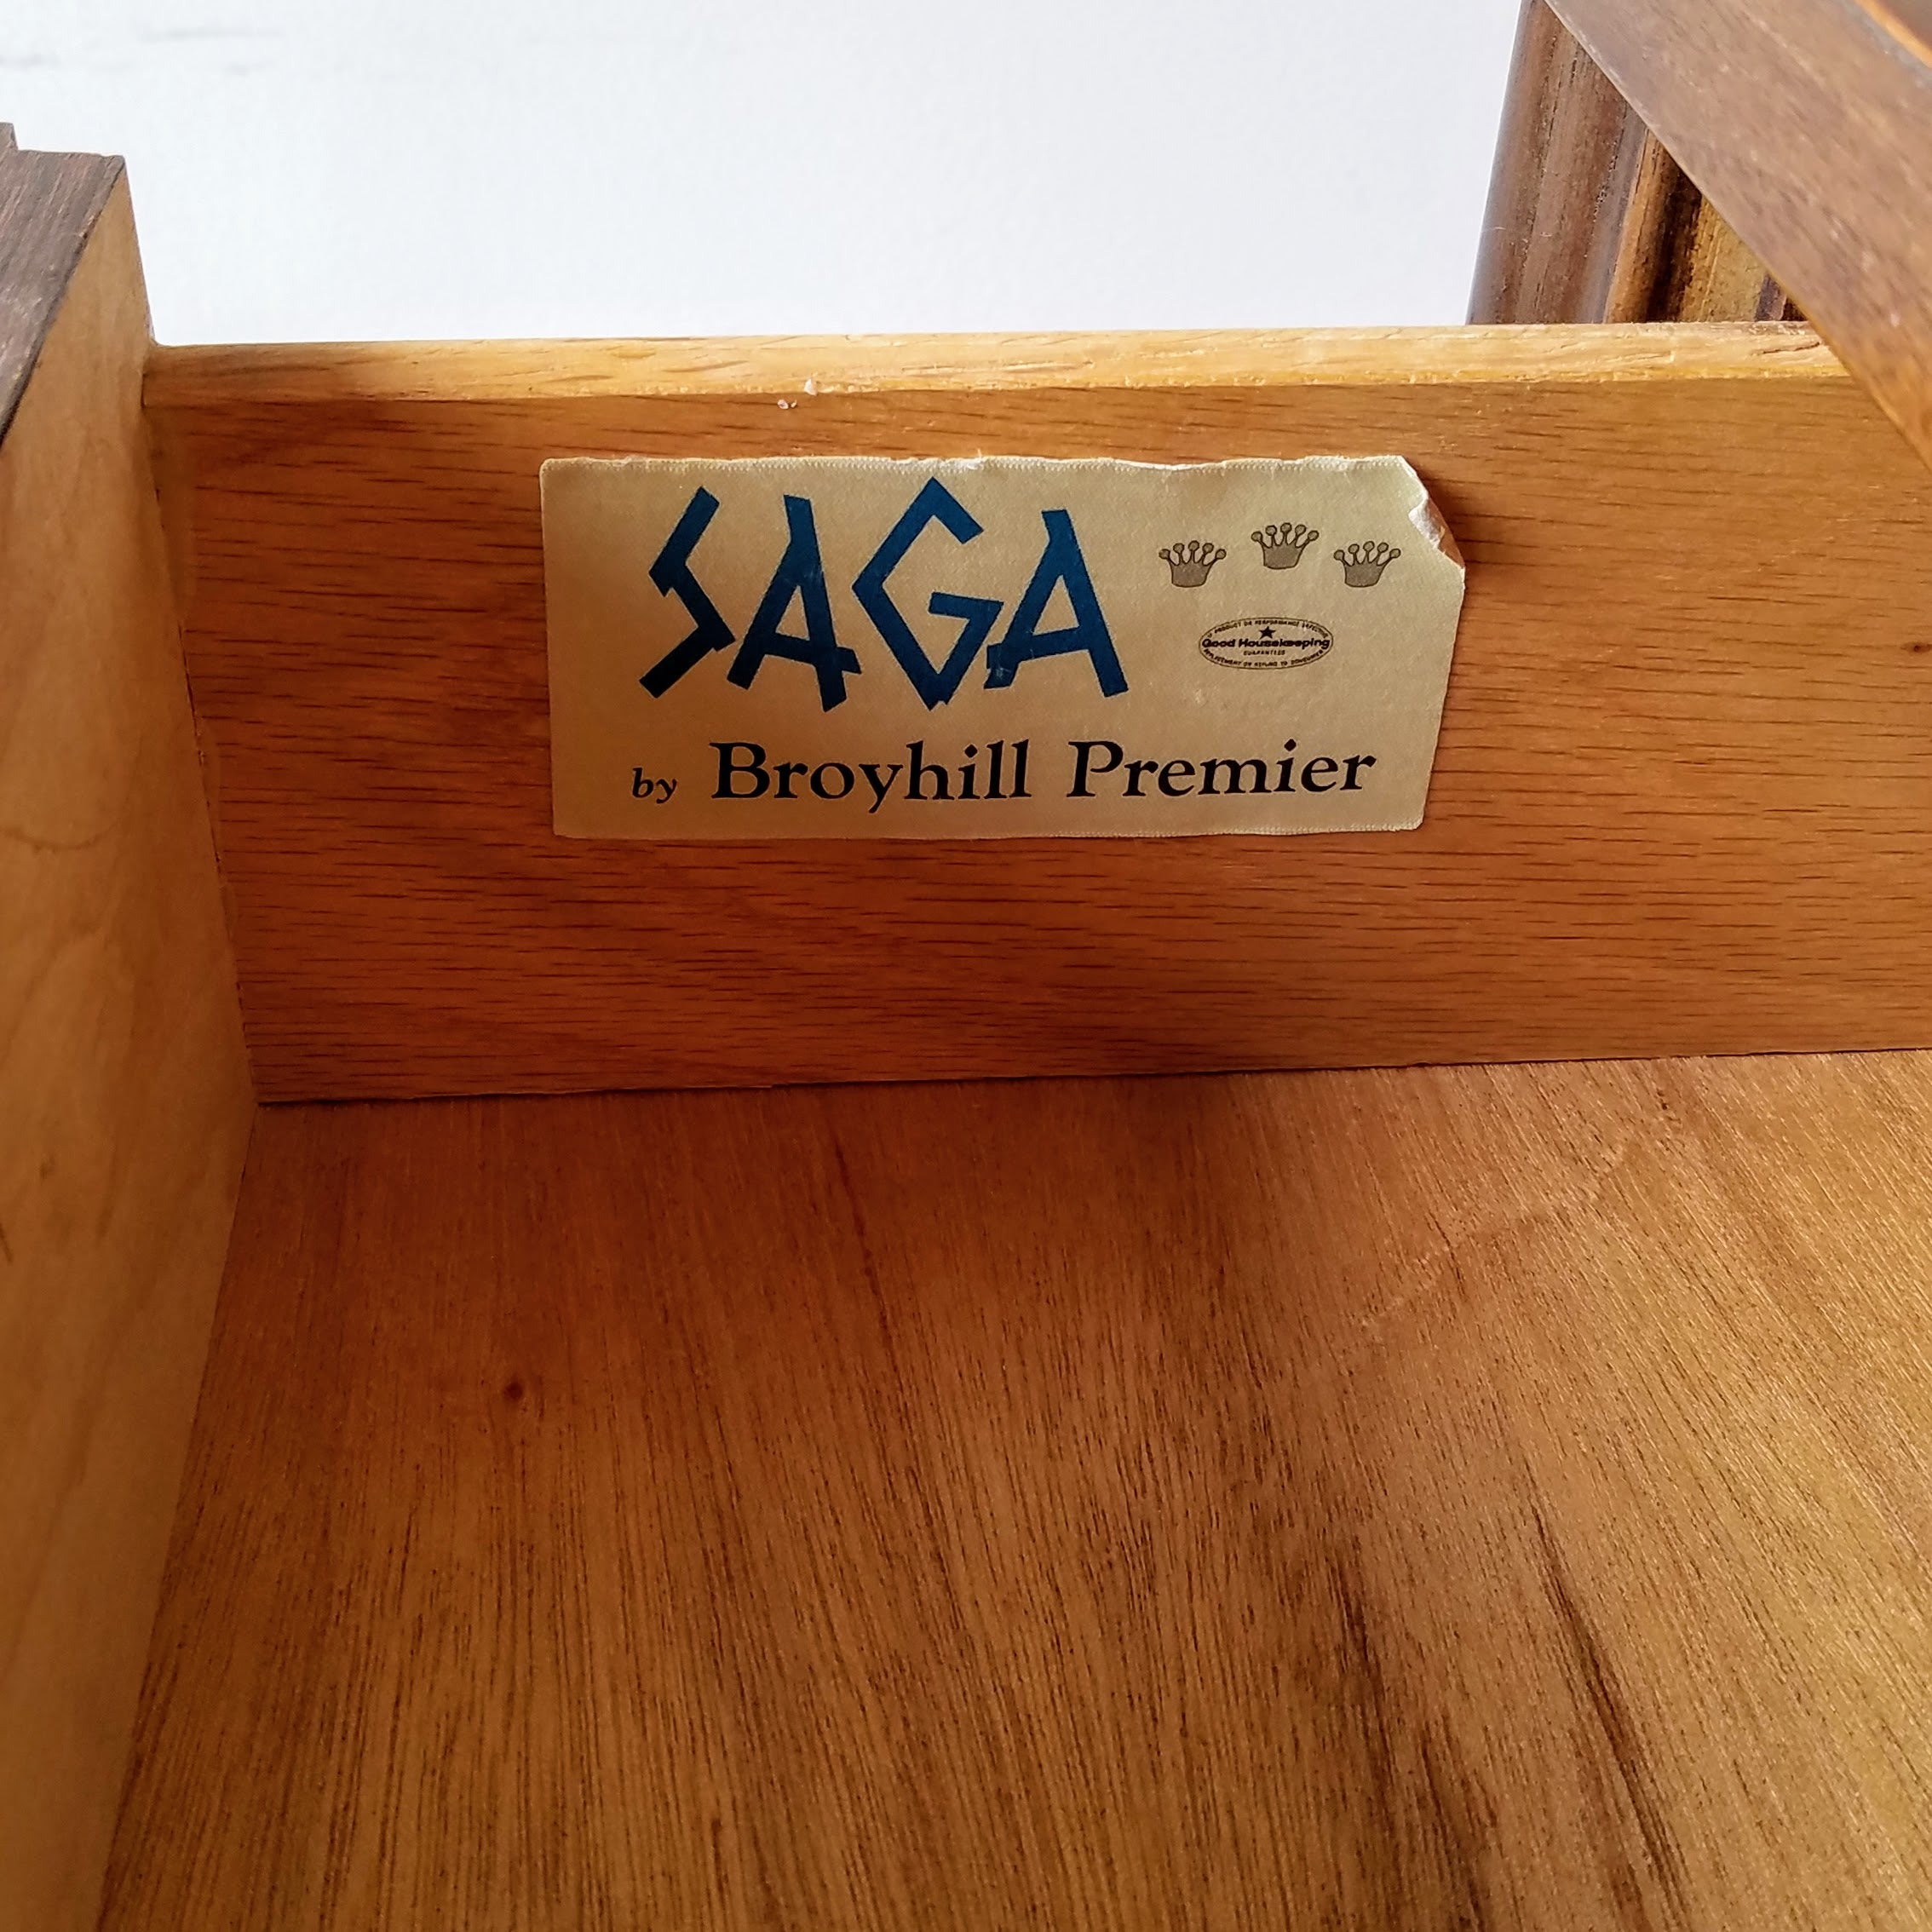 Broyhill 'Saga' Lowboy Dresser